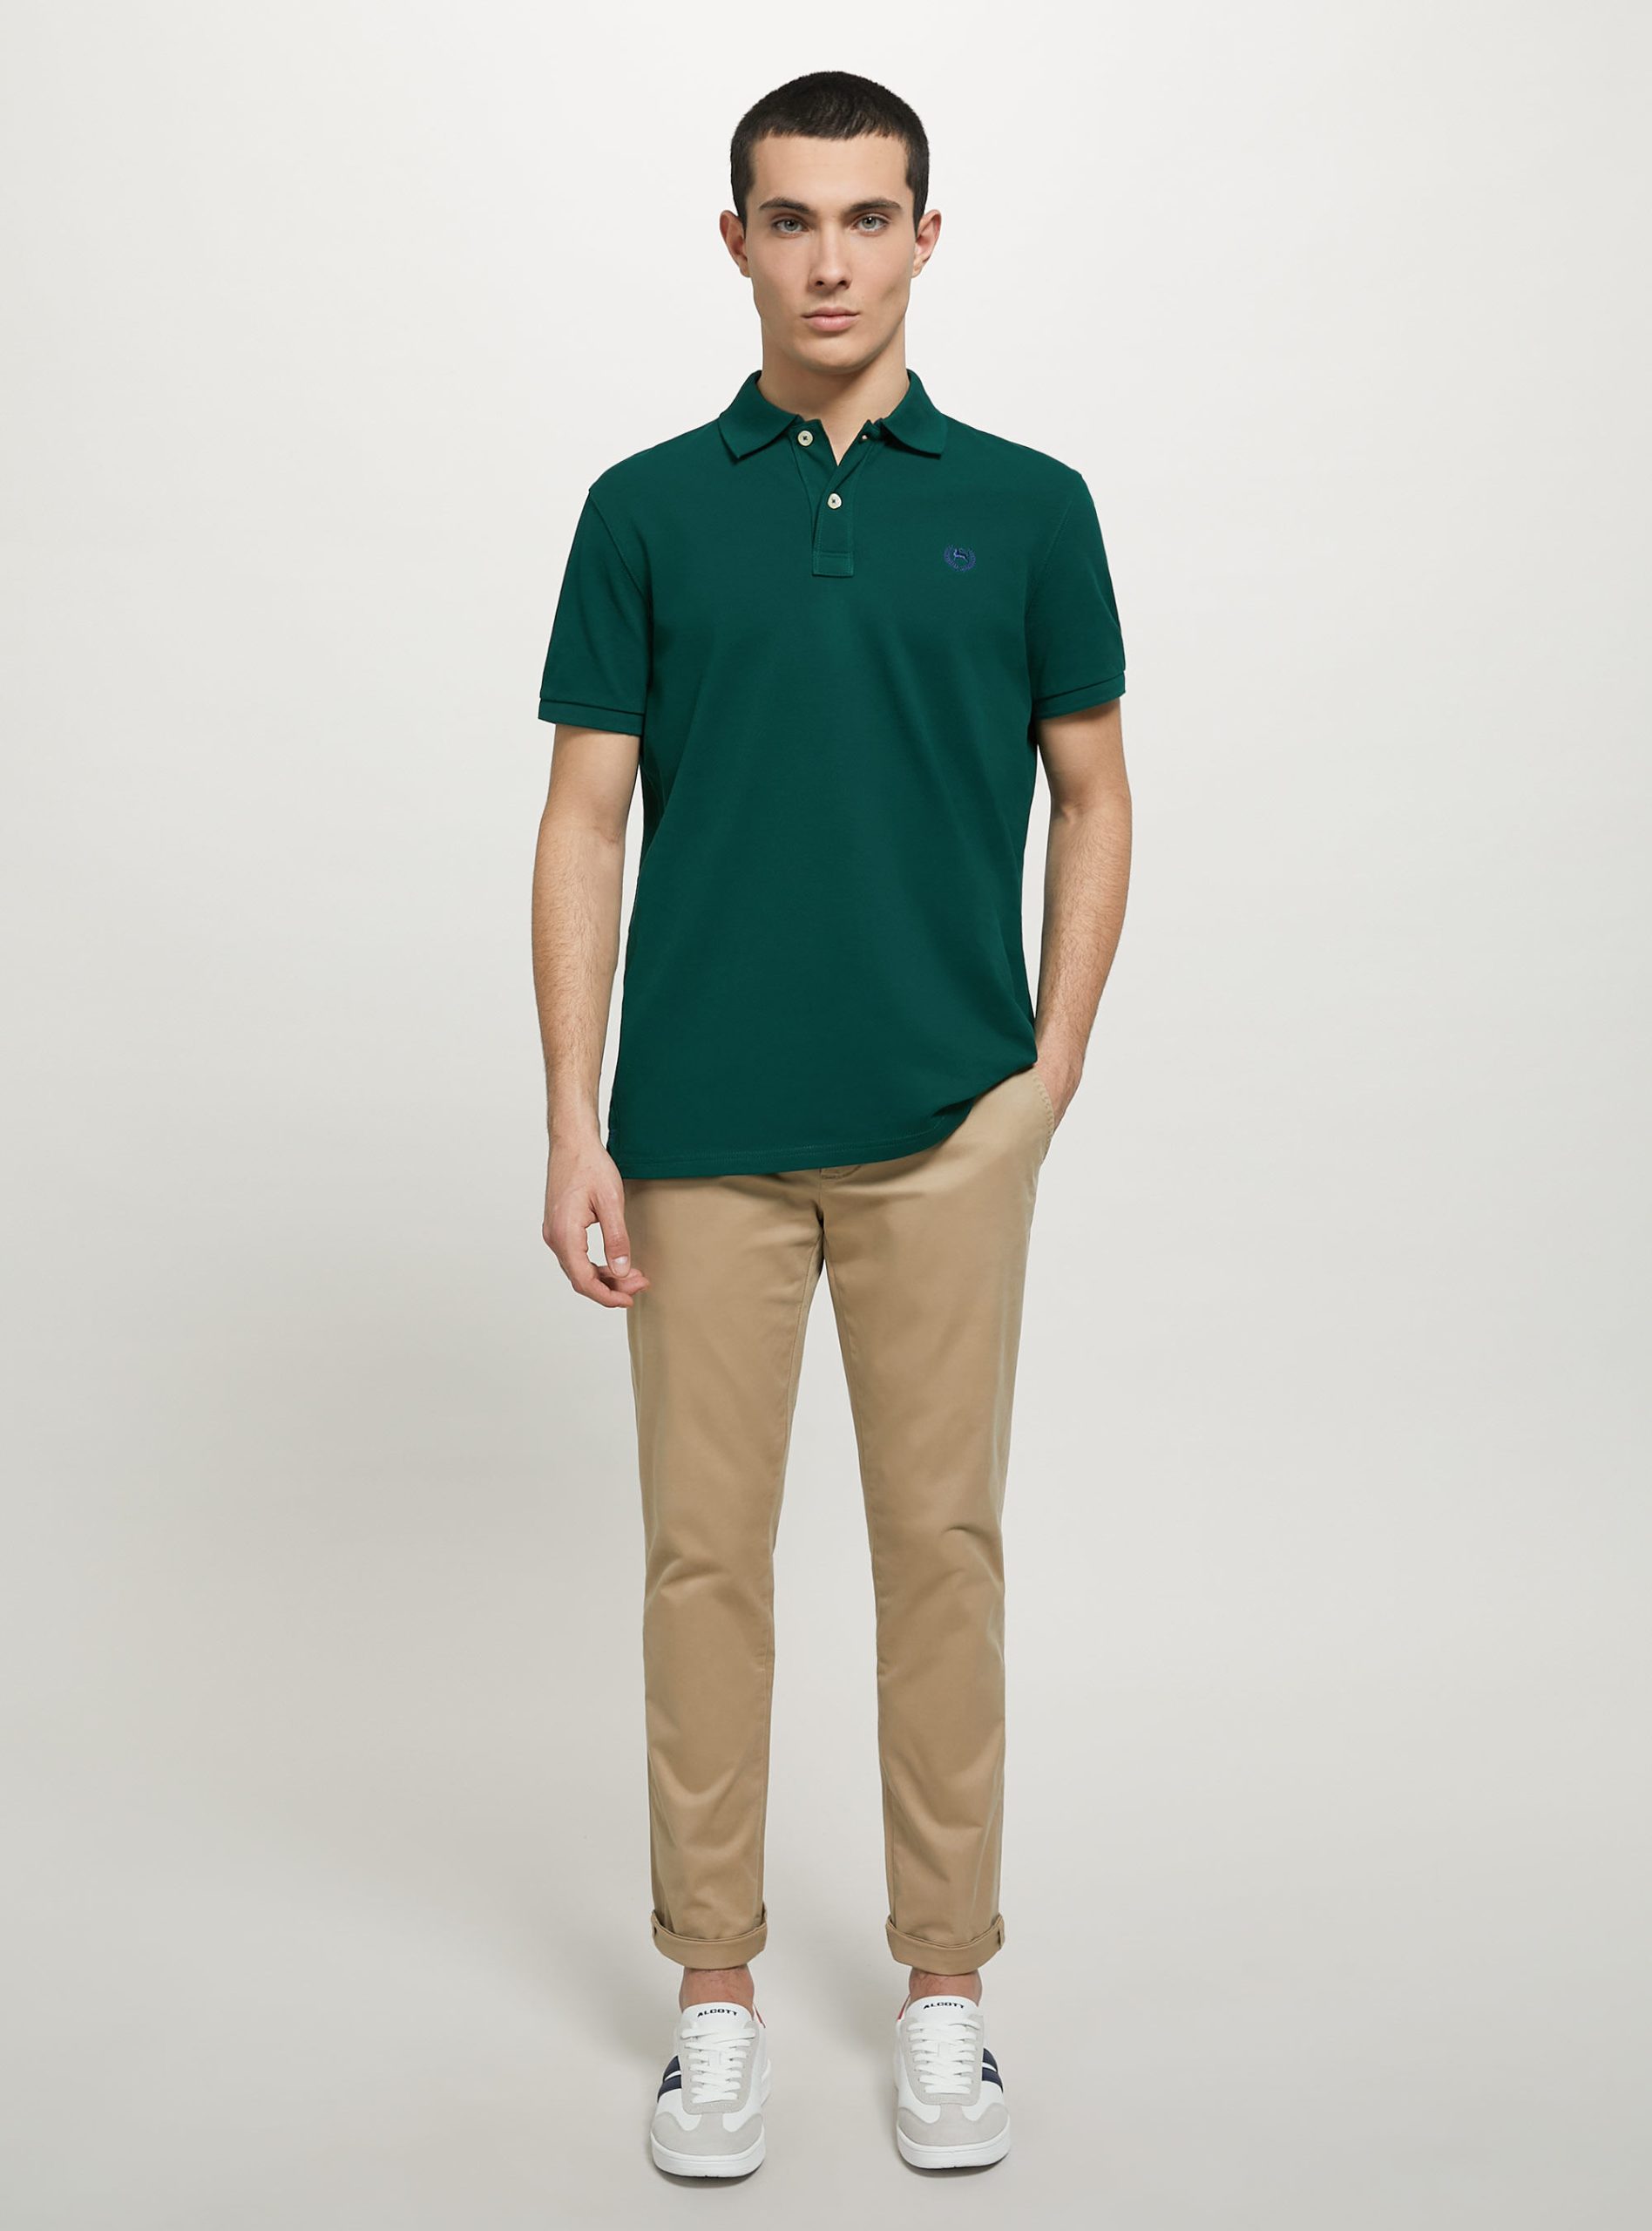 Ausfahrt Cotton Piqué Polo Shirt With Embroidery Männer Polo Gn1 Green Dark Alcott – 2